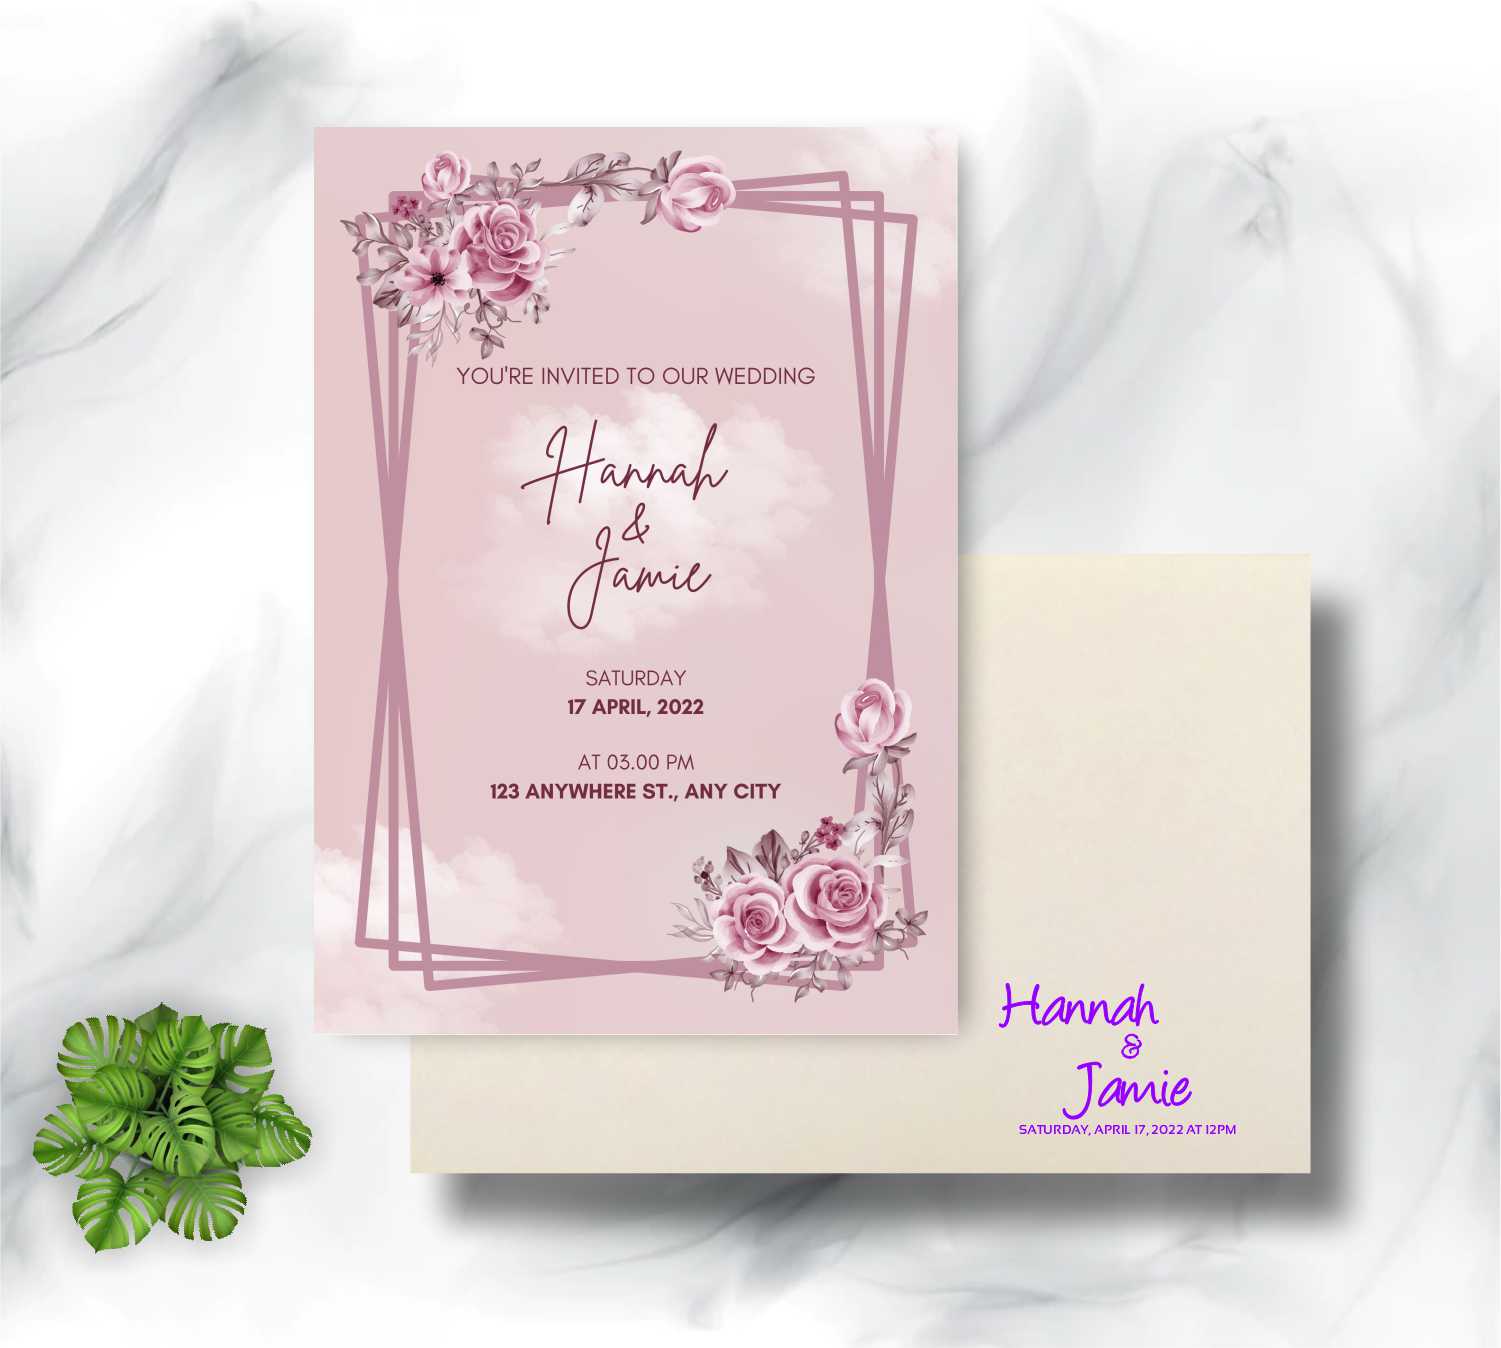 Christian Wedding Invitation Cards